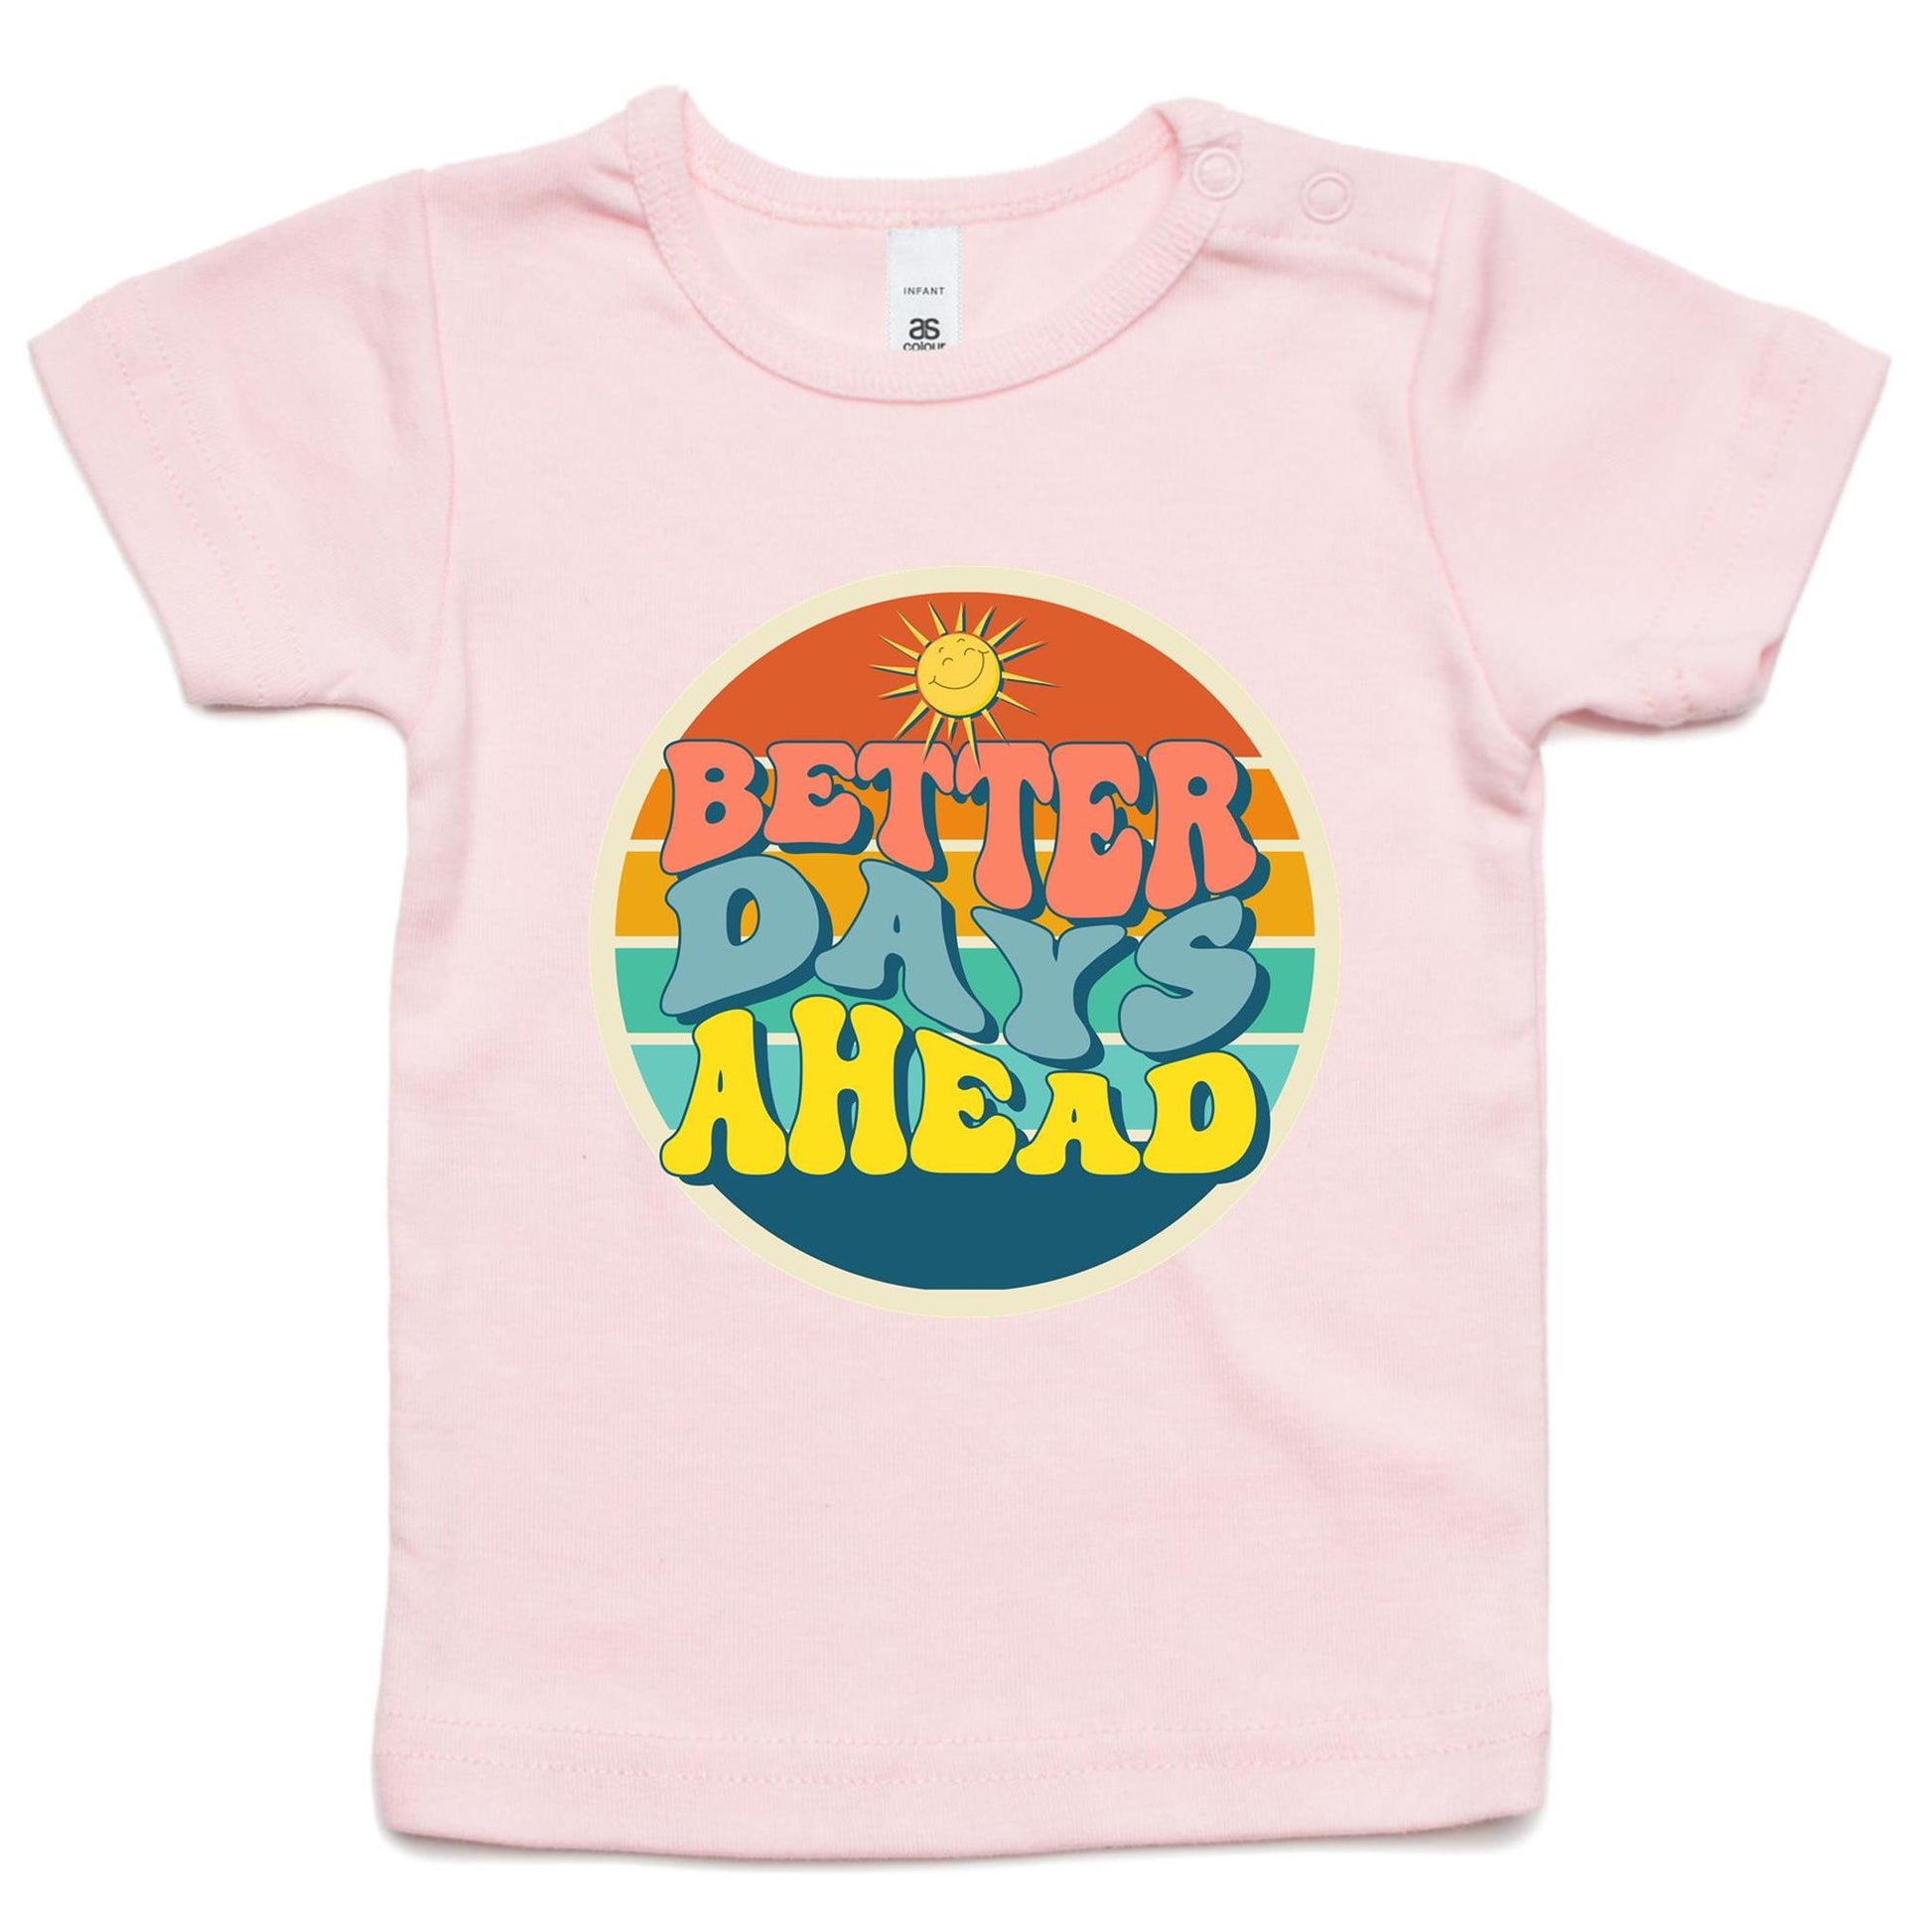 Better Days Ahead - Baby T-shirt Pink Baby T-shirt Motivation Retro